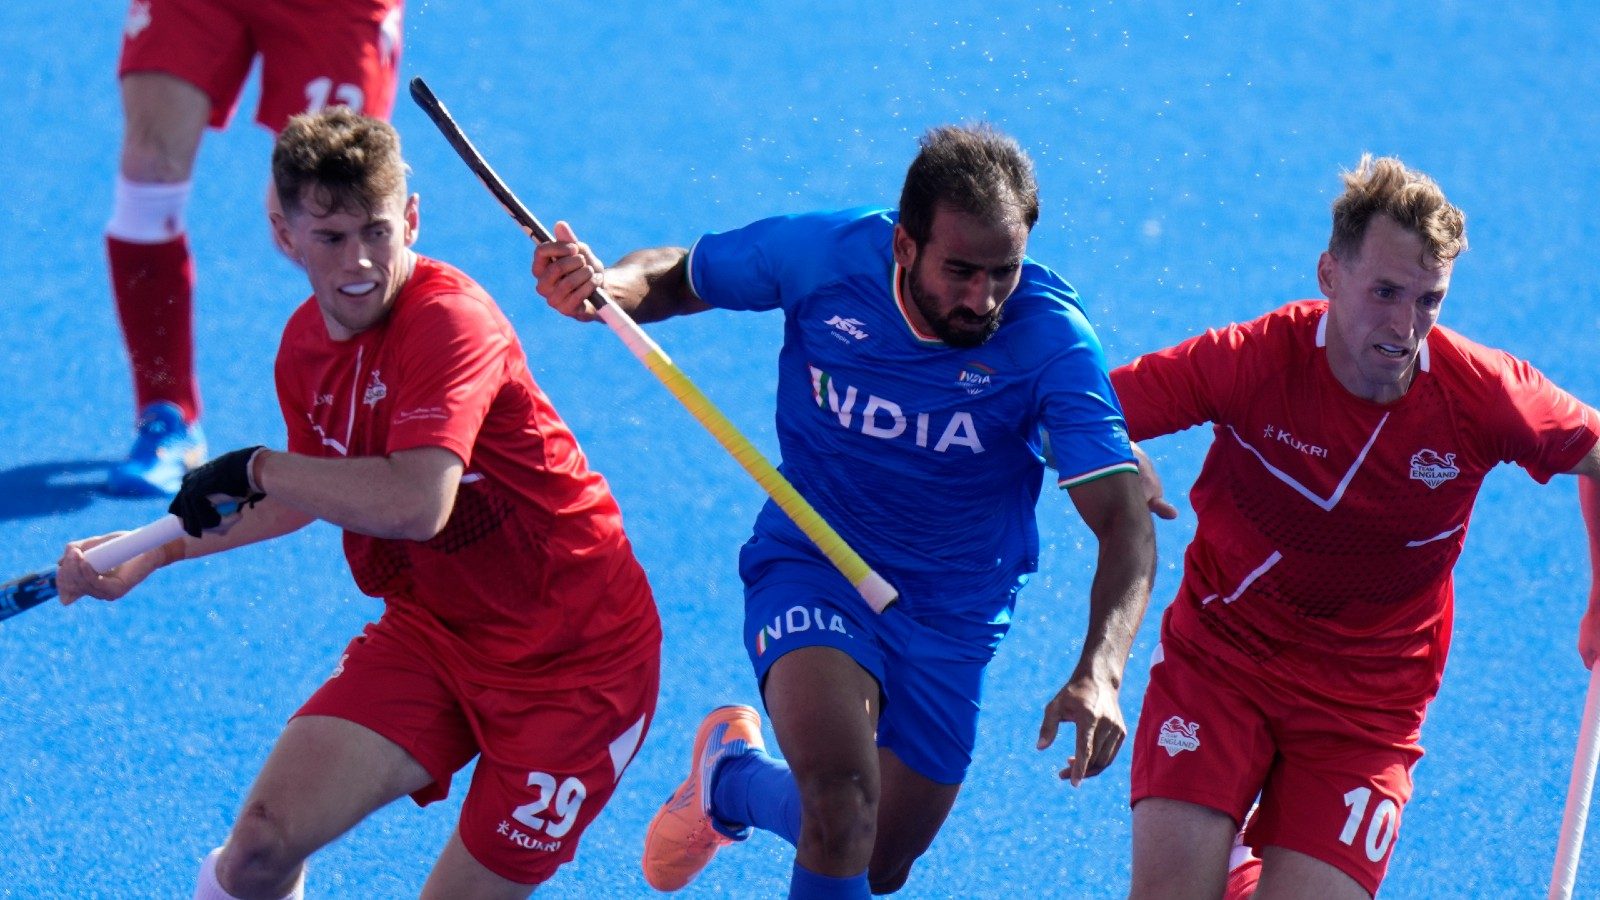 CWG 2022: Indian men's hockey team draws 4-4 against England - Bharat Times